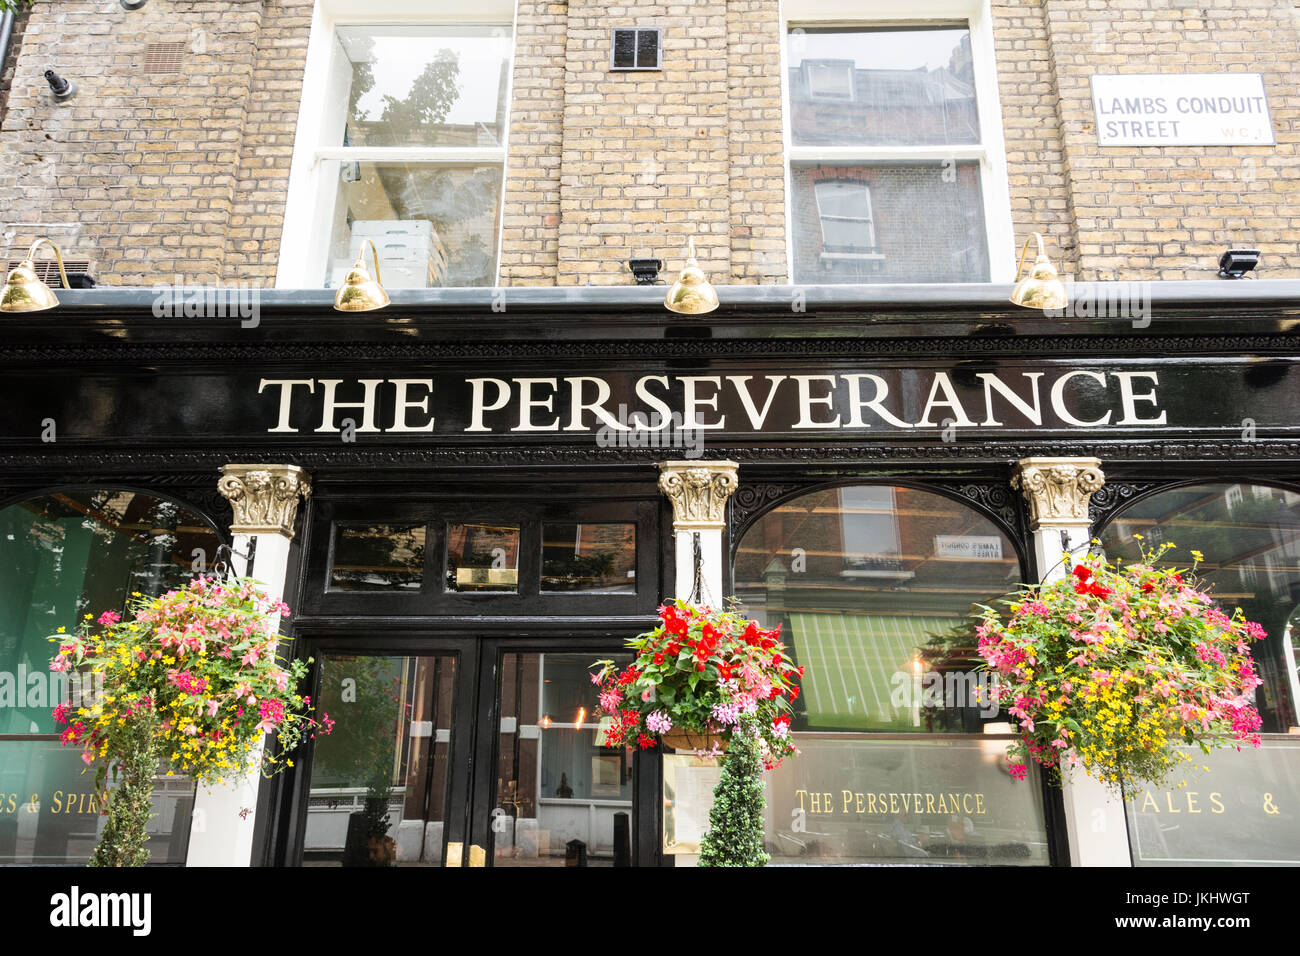 The Perseverance public house on Lamb's Conduit Street, Bloomsbury, London, UK Stock Photo